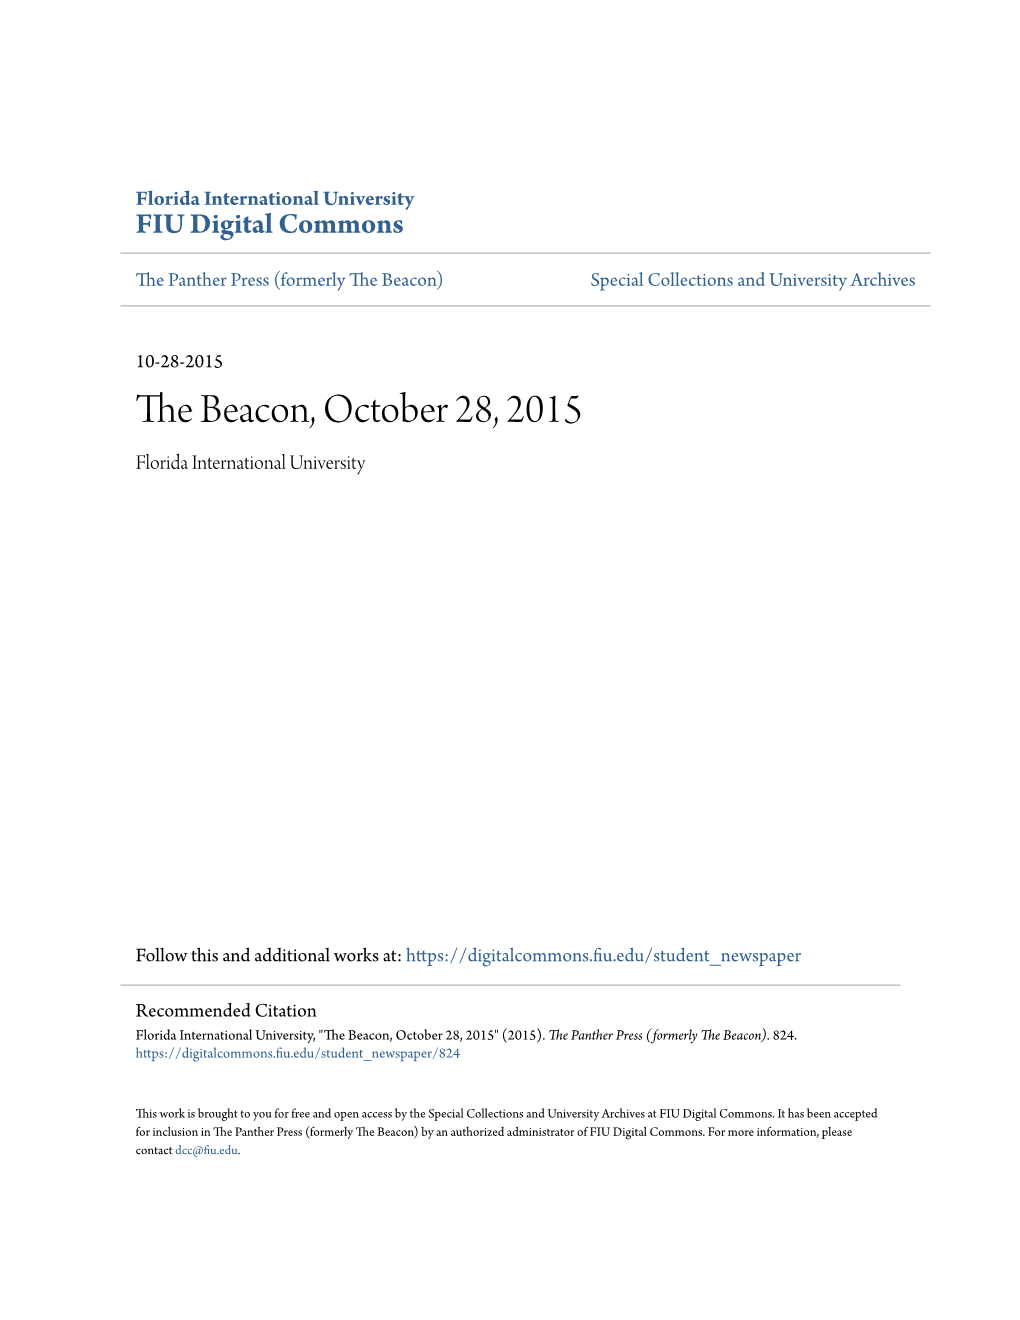 The Beacon, October 28, 2015 Florida International University